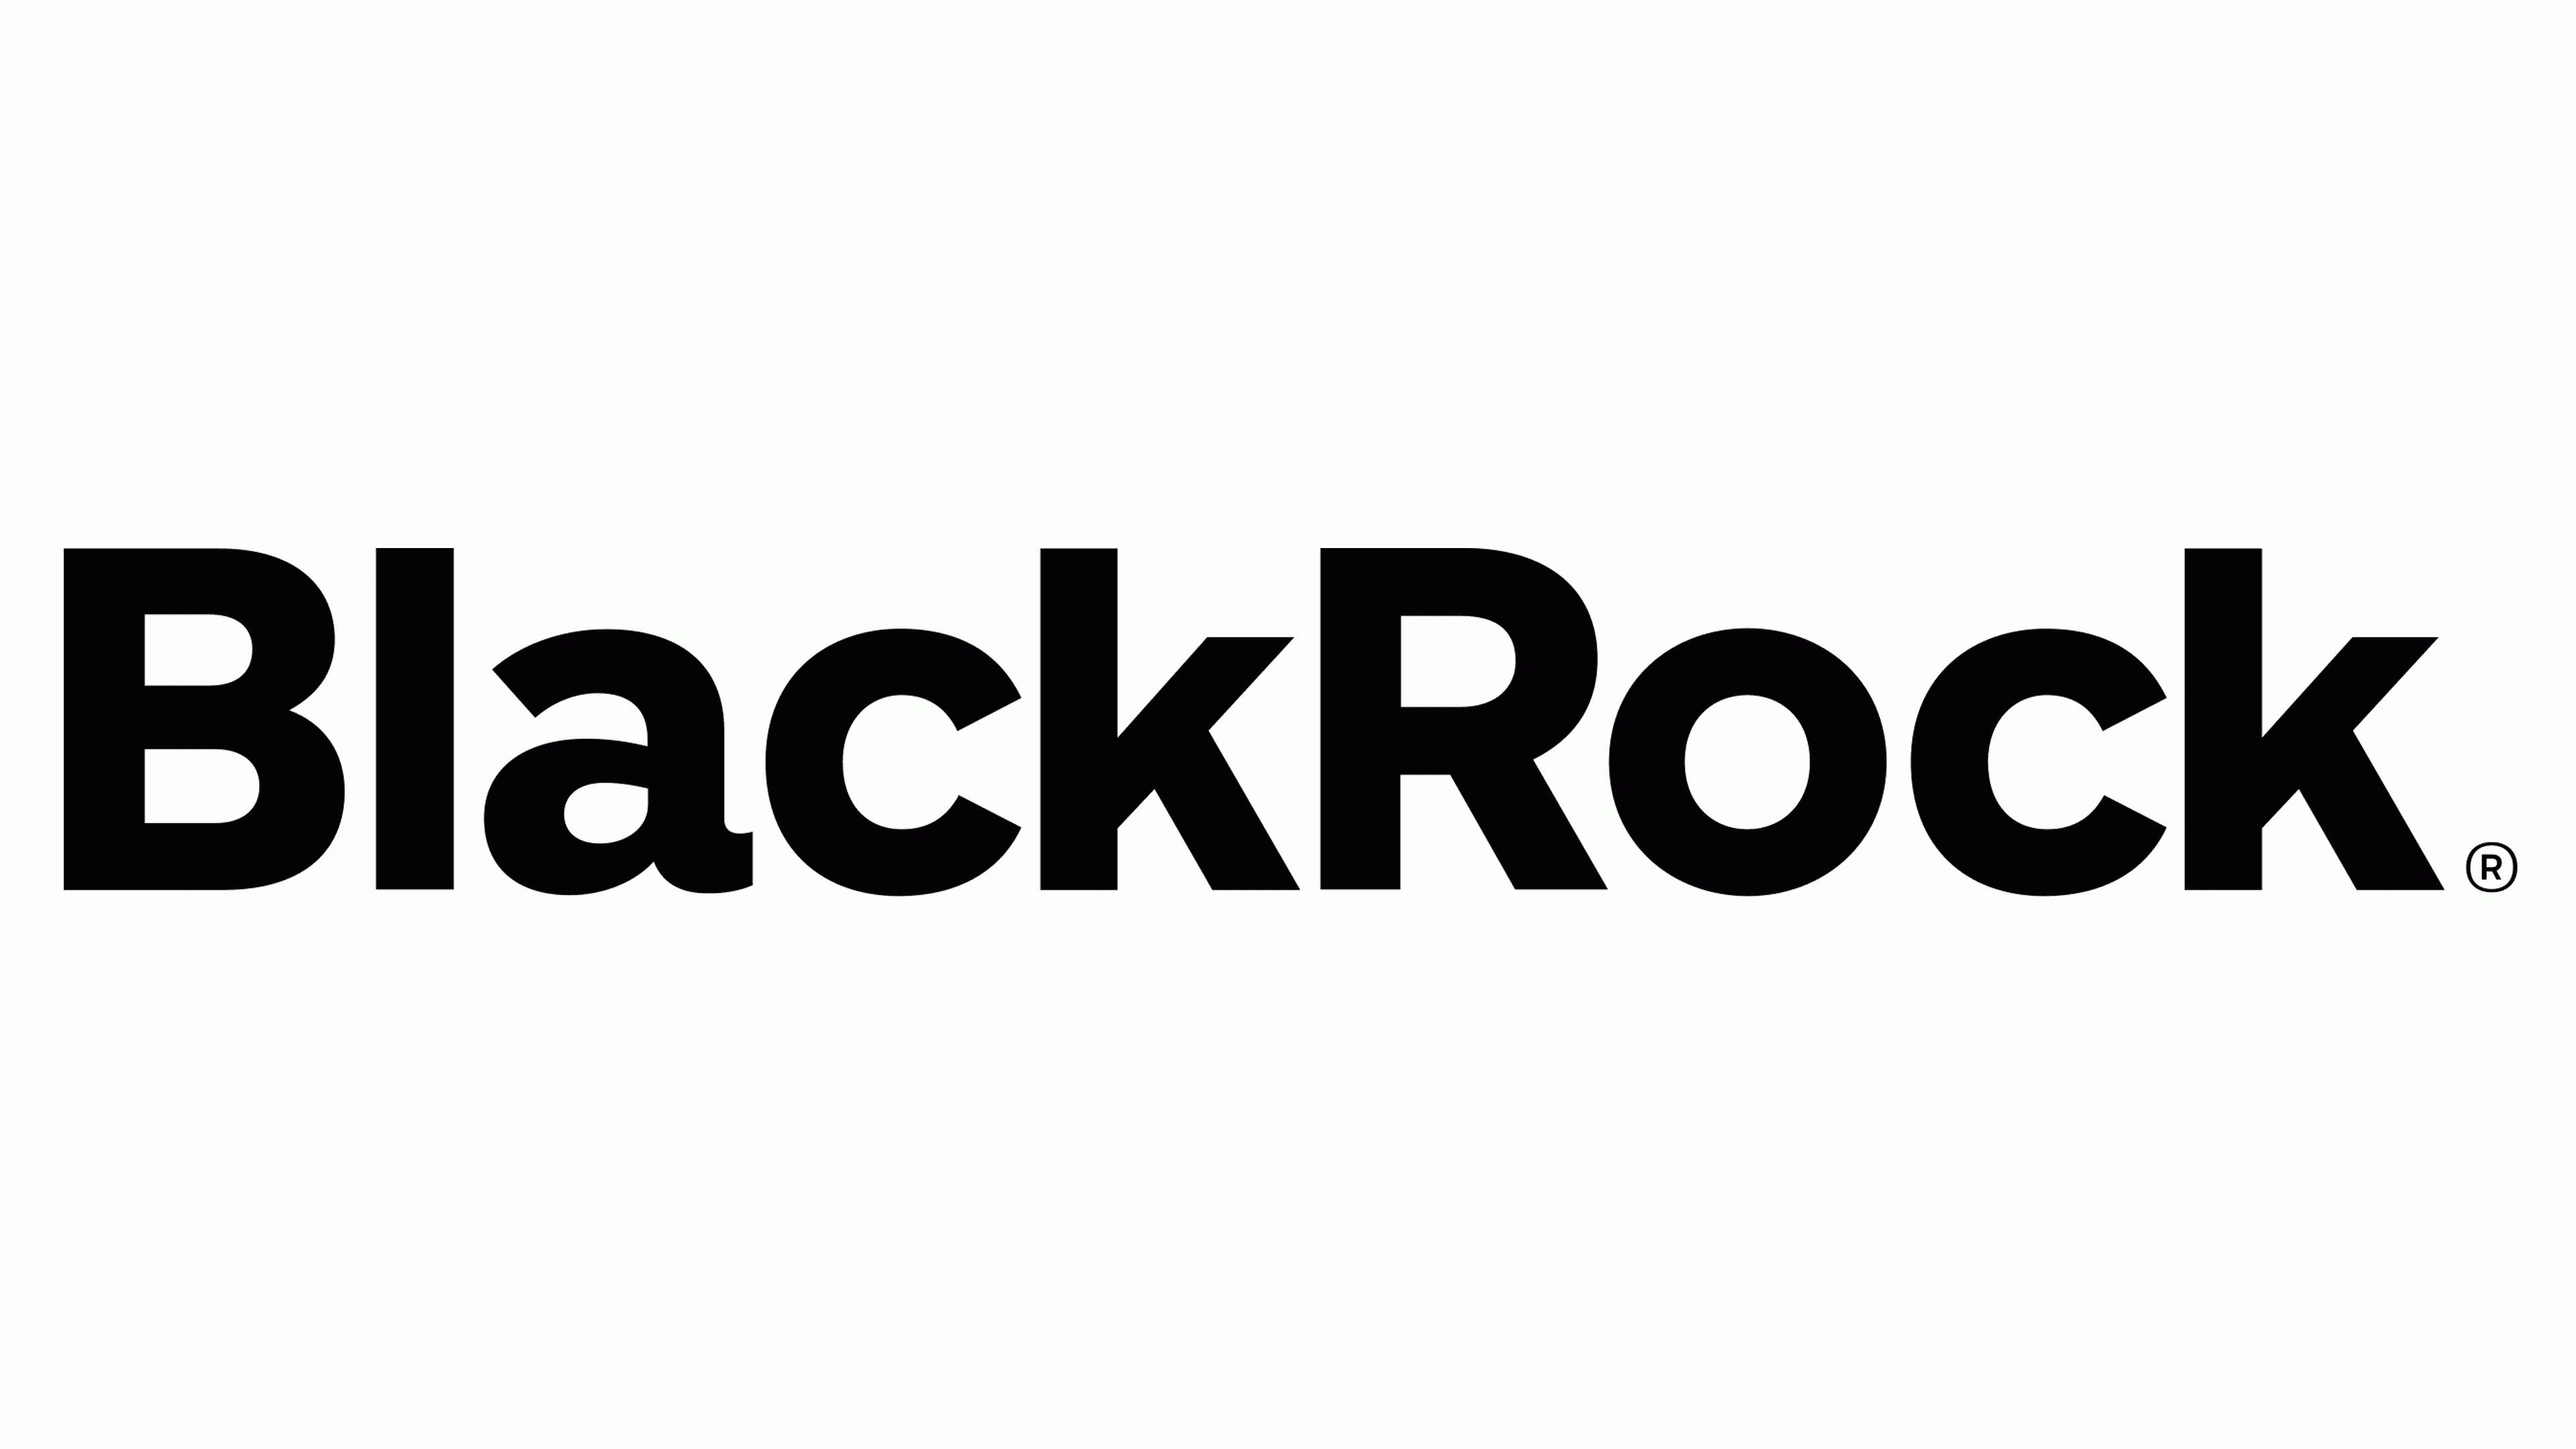 BLACKROCK INC